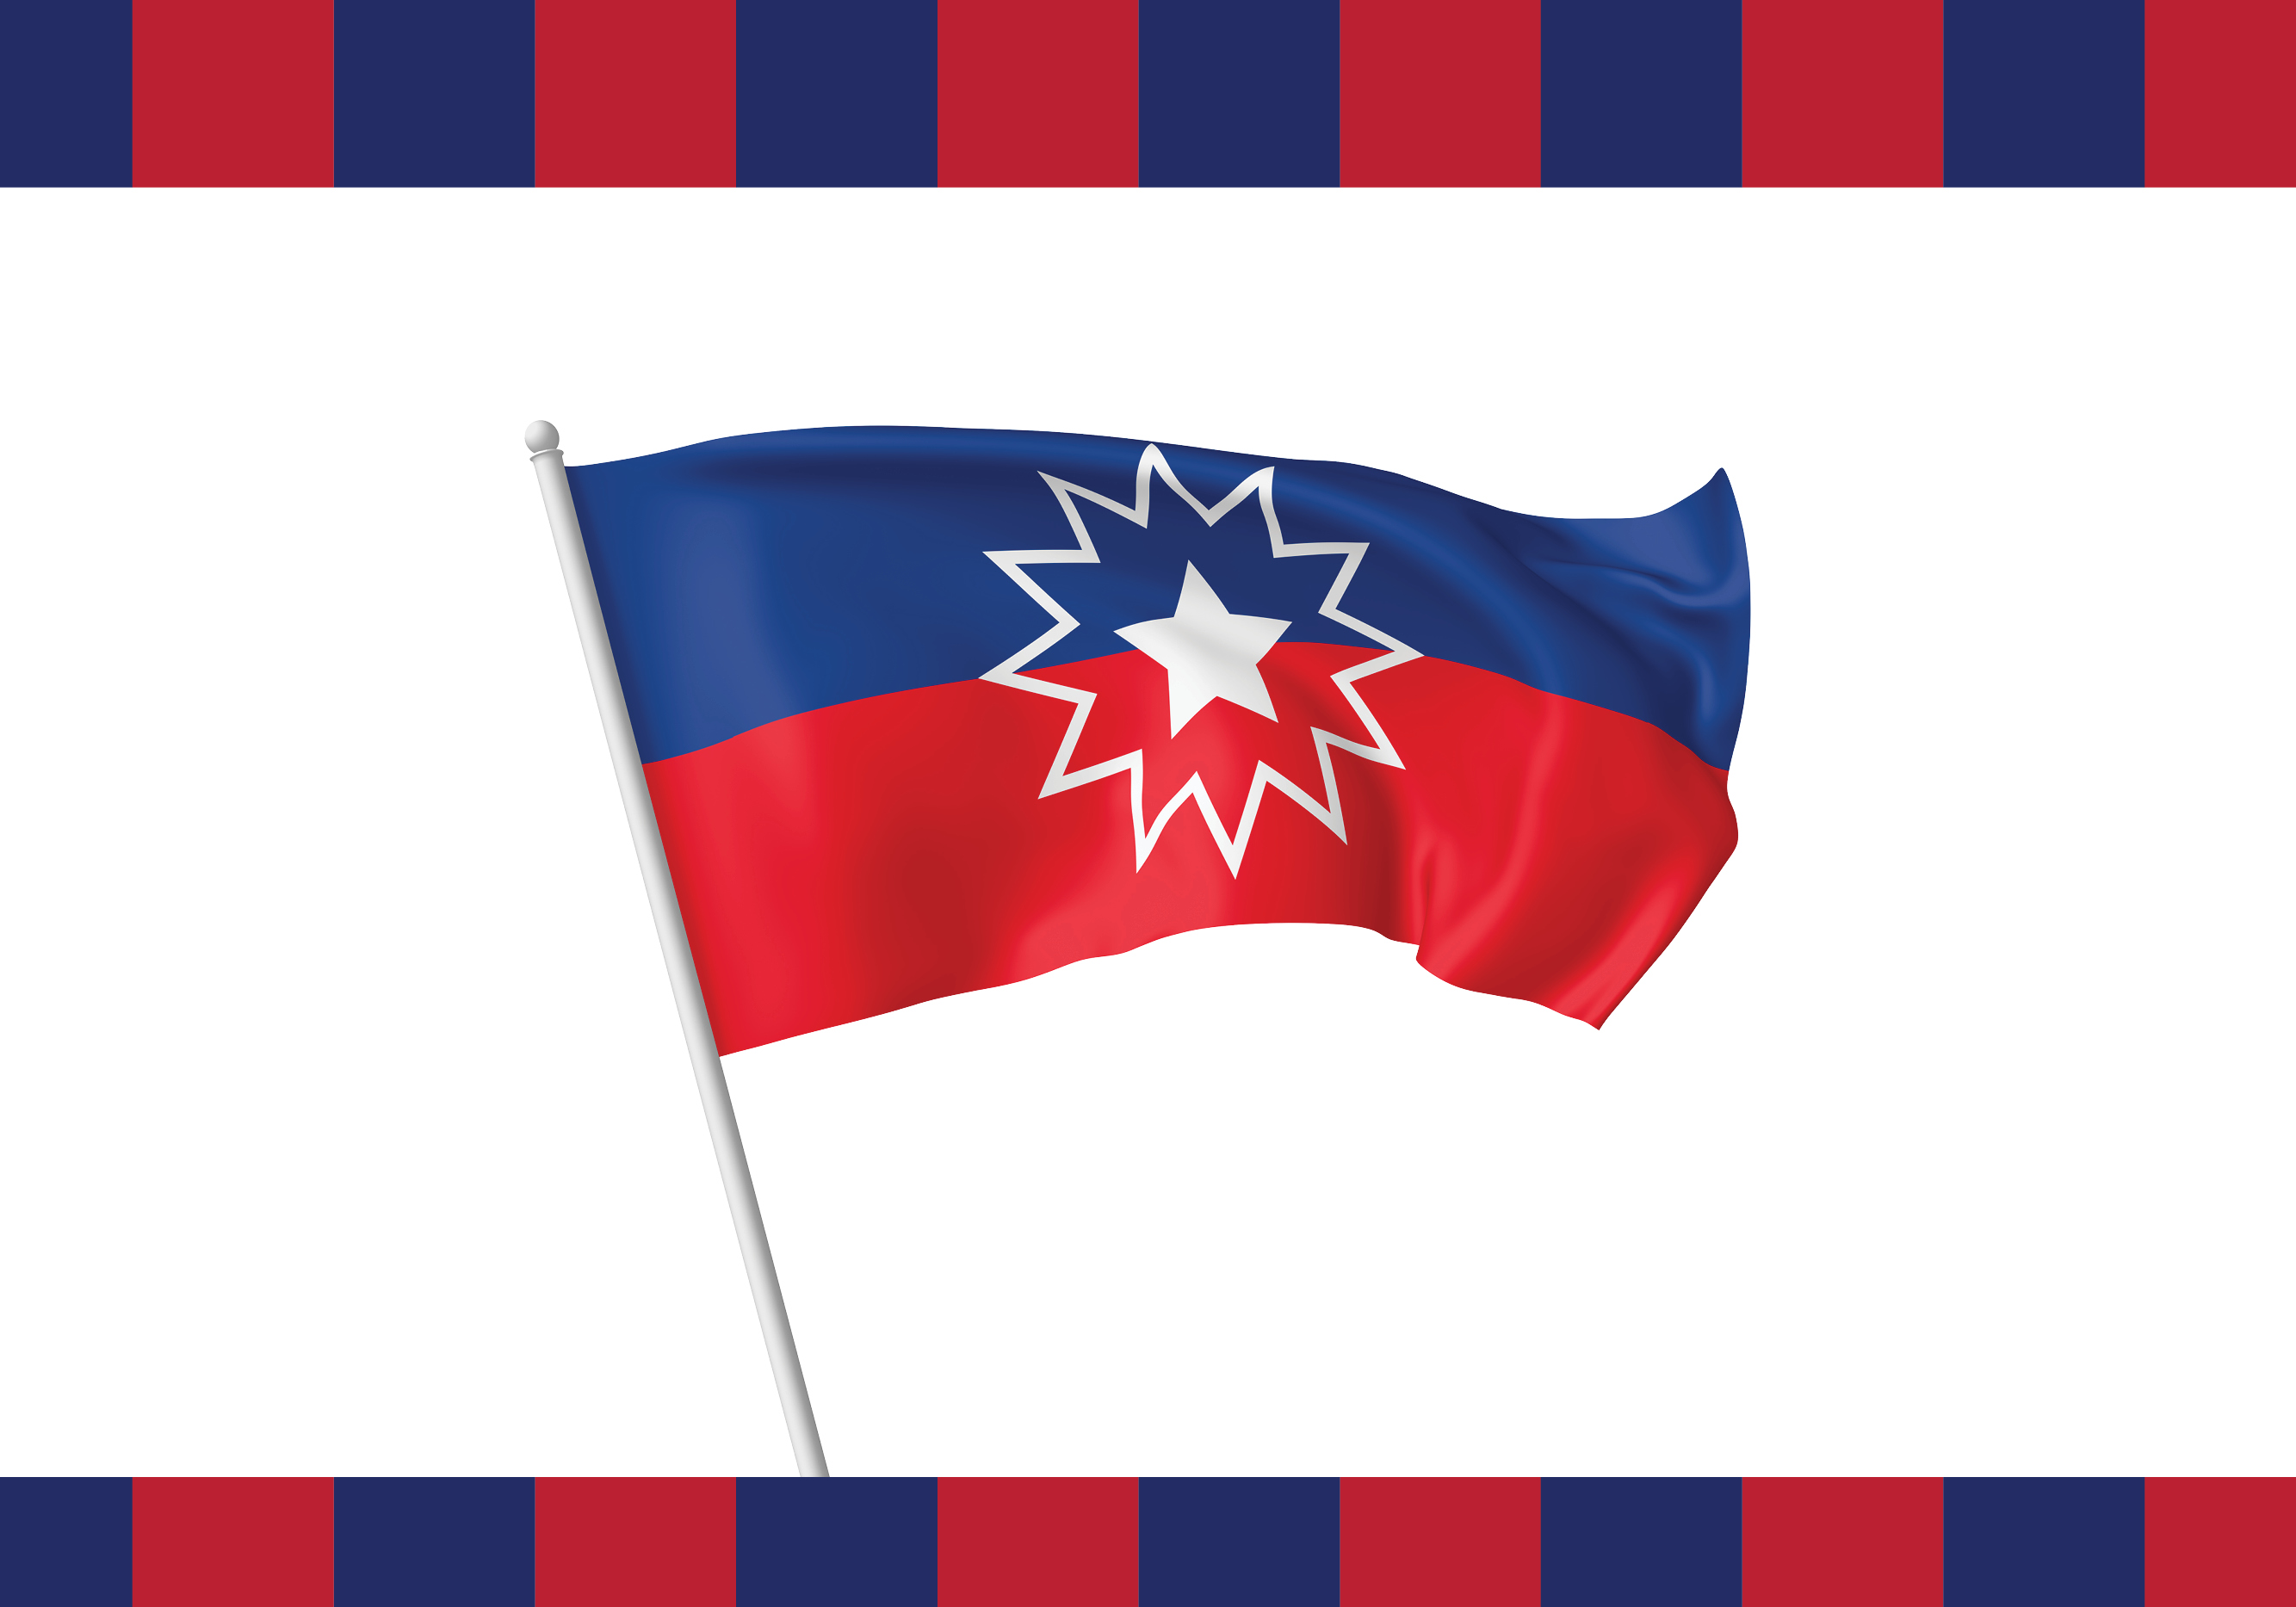 Juneteenth flag with Duquesne University branding